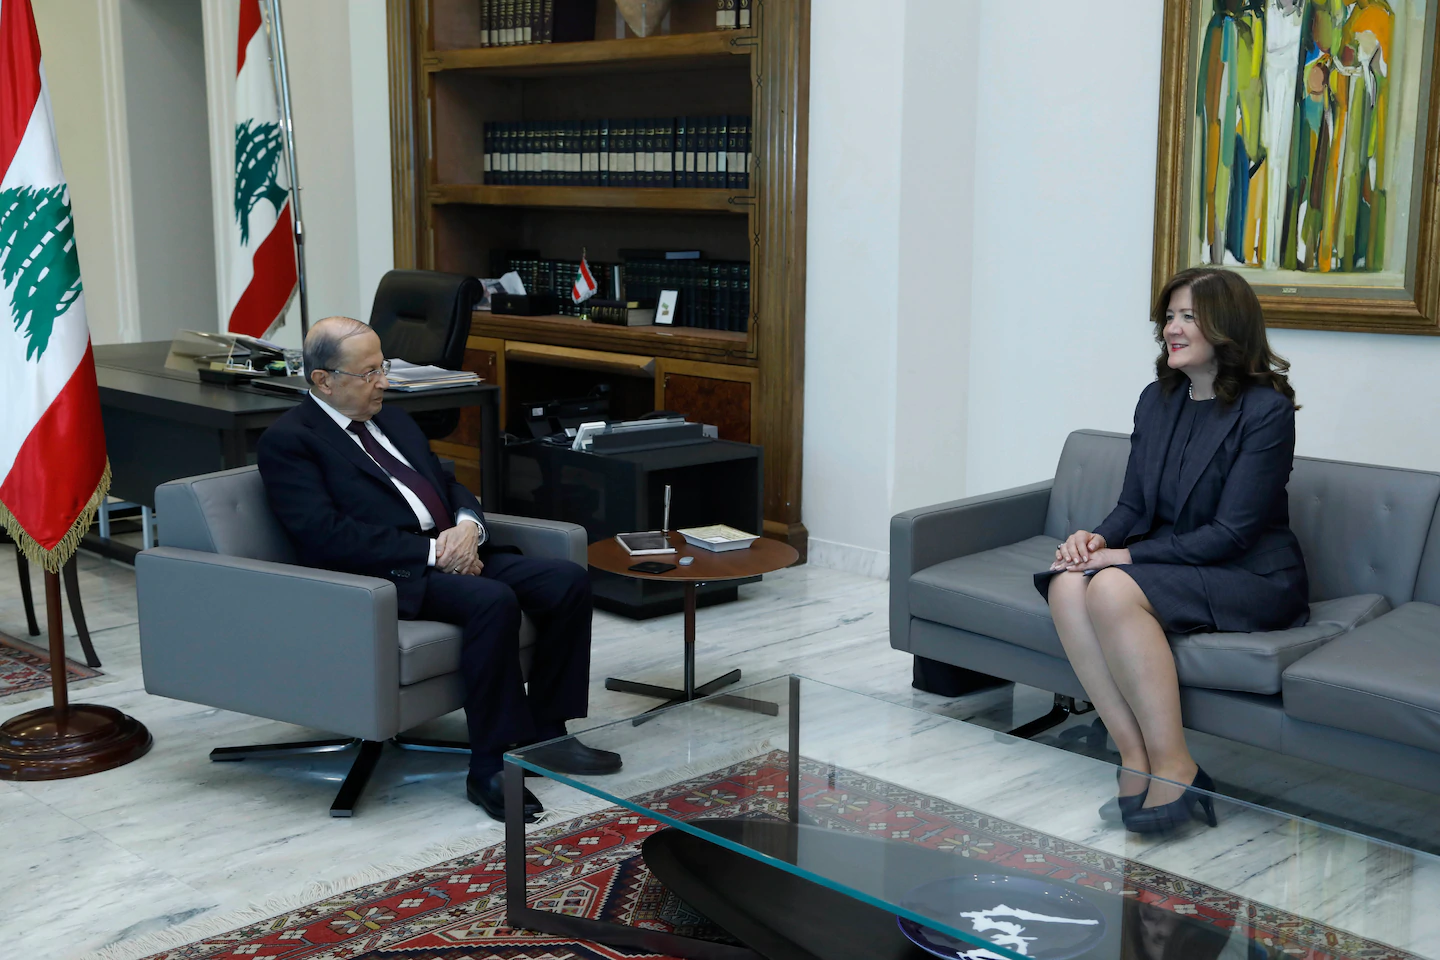 Lebanon judge media ban after Ambassador Shea comments on Hezbollah, Nasrallah